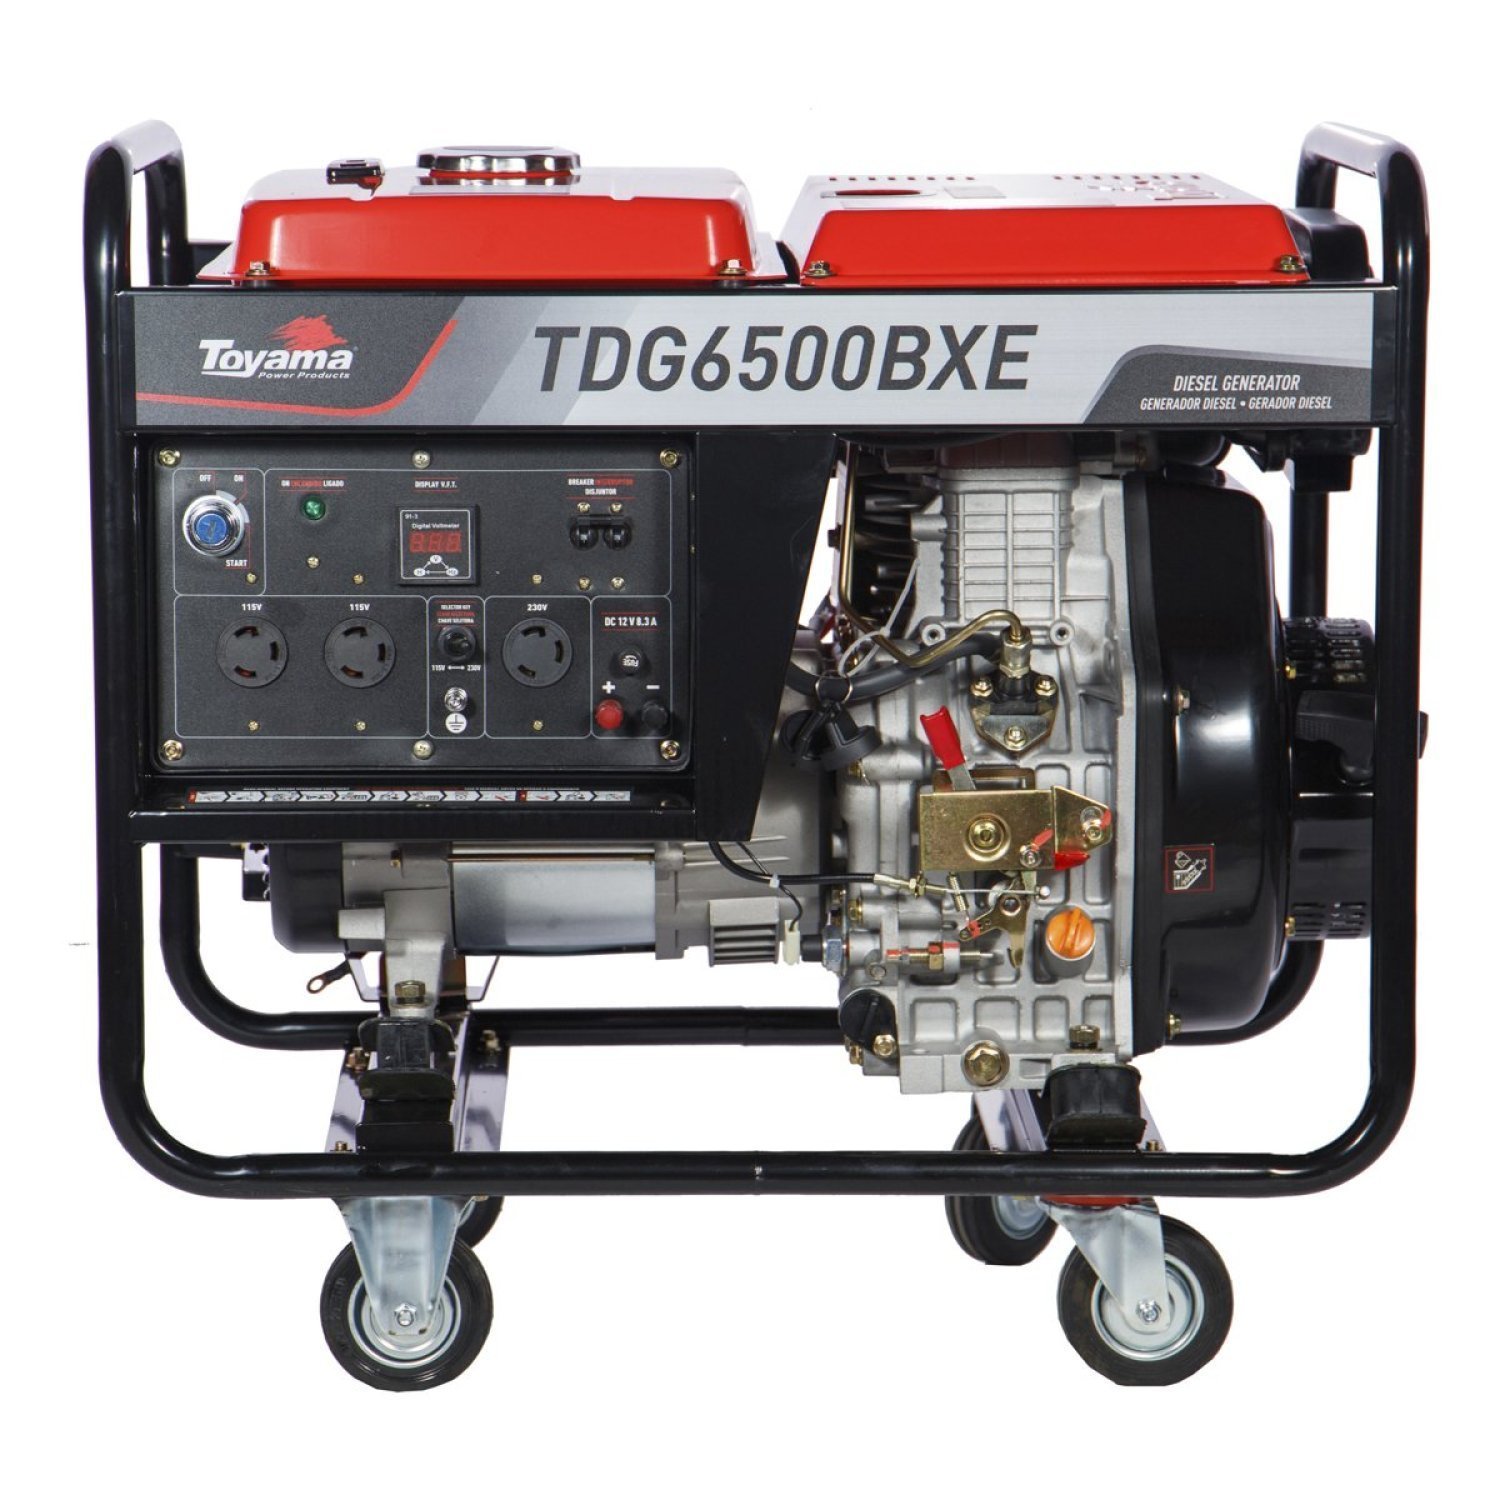 Gerador de Energia à Diesel Tdg6500bxe Toyama - 2